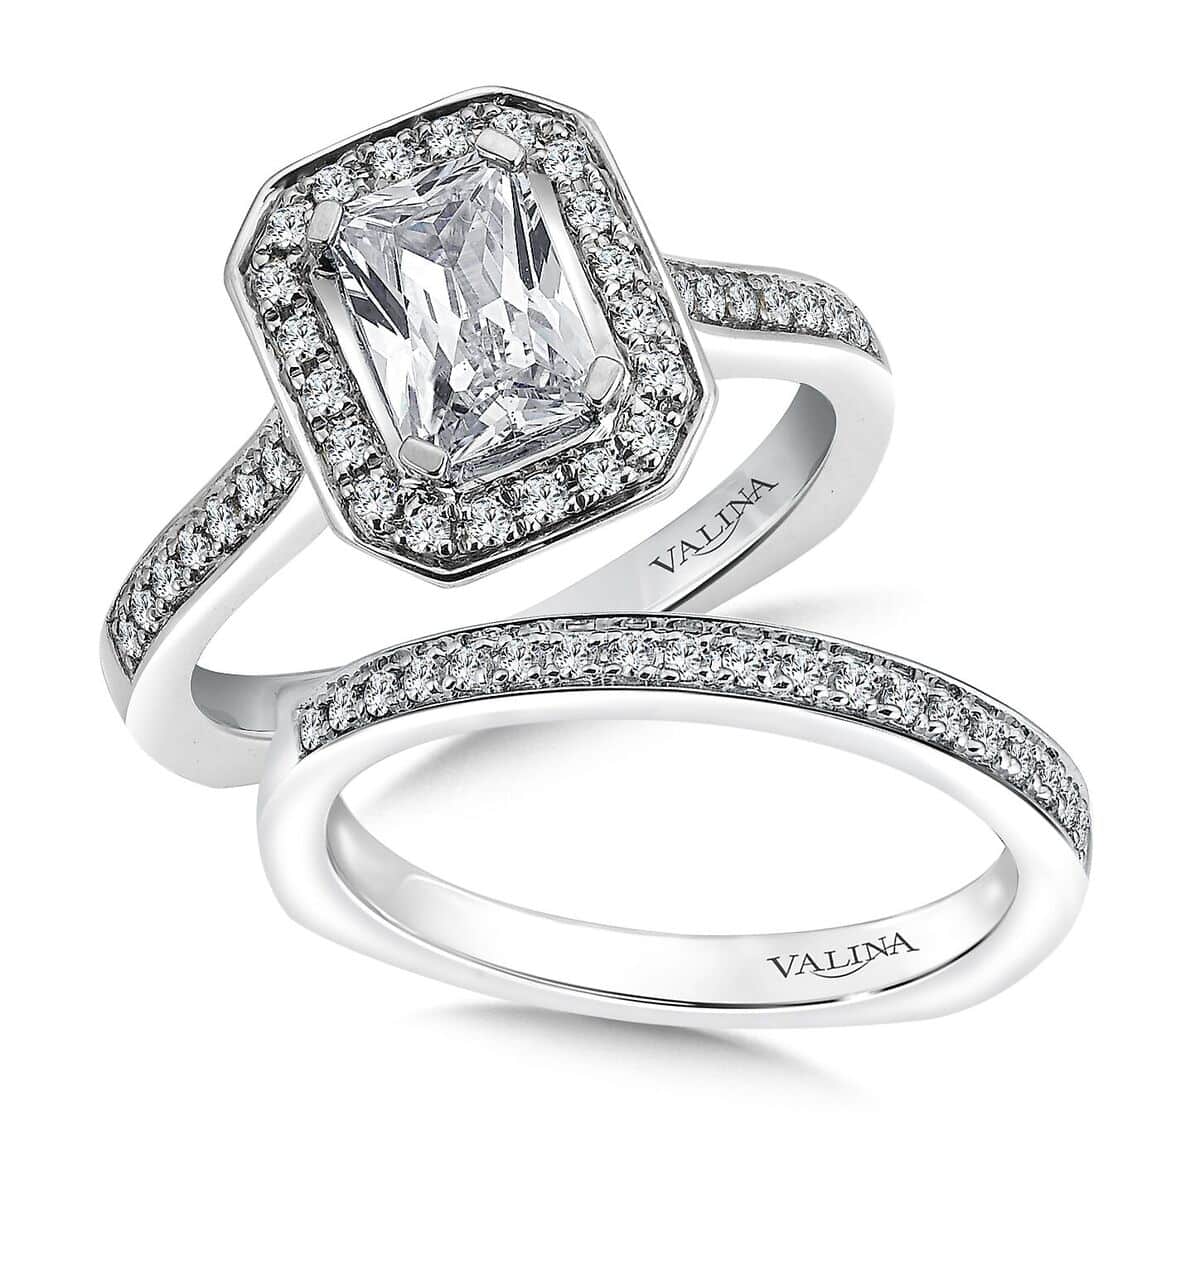 Custom Emerald Cut Engagement Ring in Dallas texas - Wholesale Engagement Rings